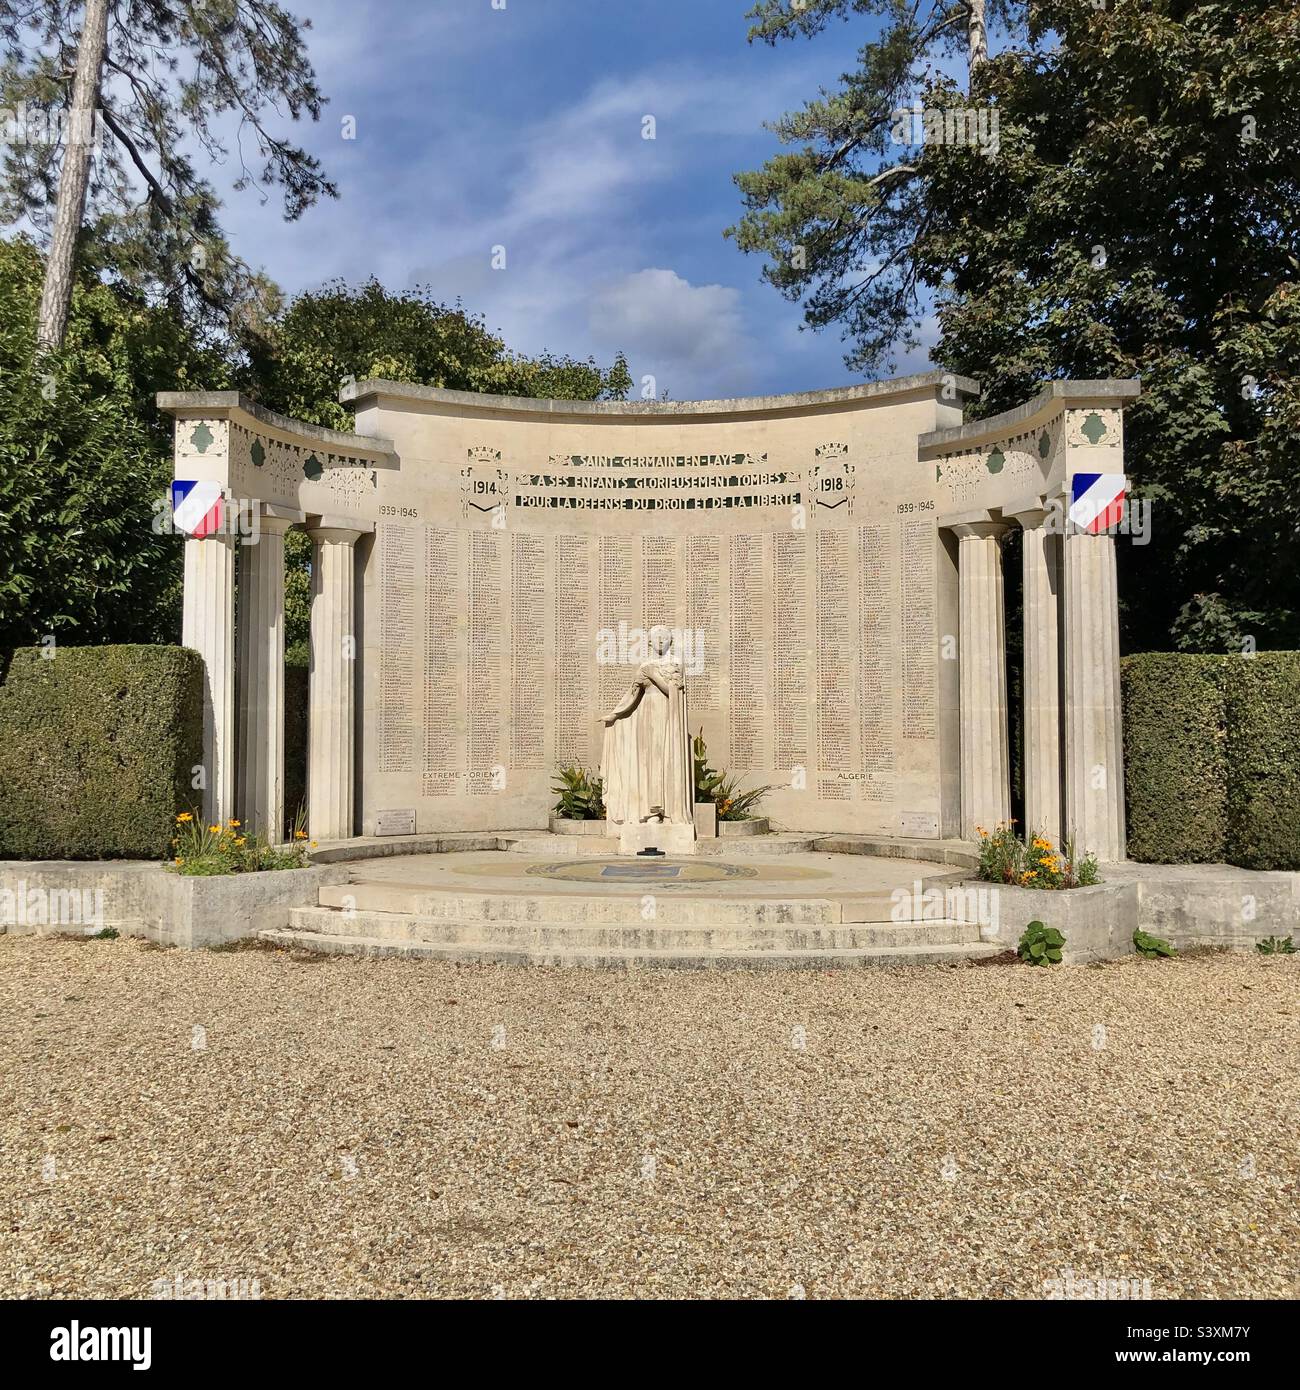 A war memorial to the fallen soldiers of Saint Germain en Laye, France. Stock Photo